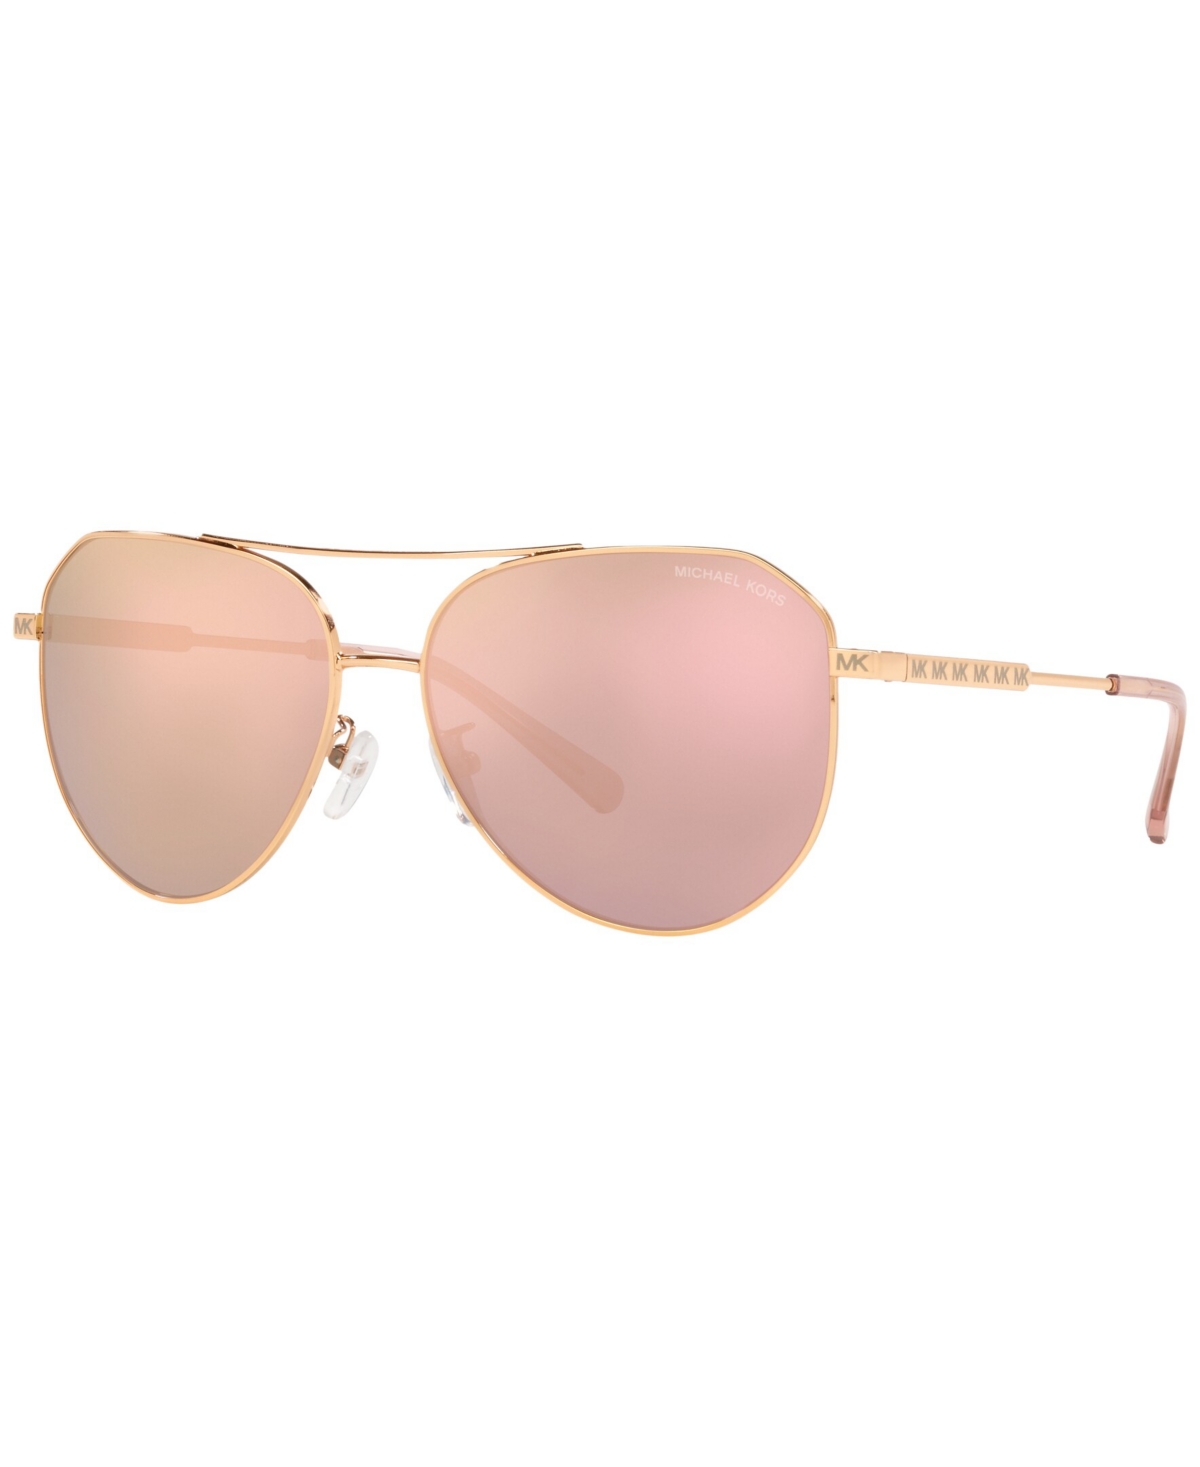 Michael Kors Women's Sunglasses, Mk1109 Cheyenne In Rose Gold-tone